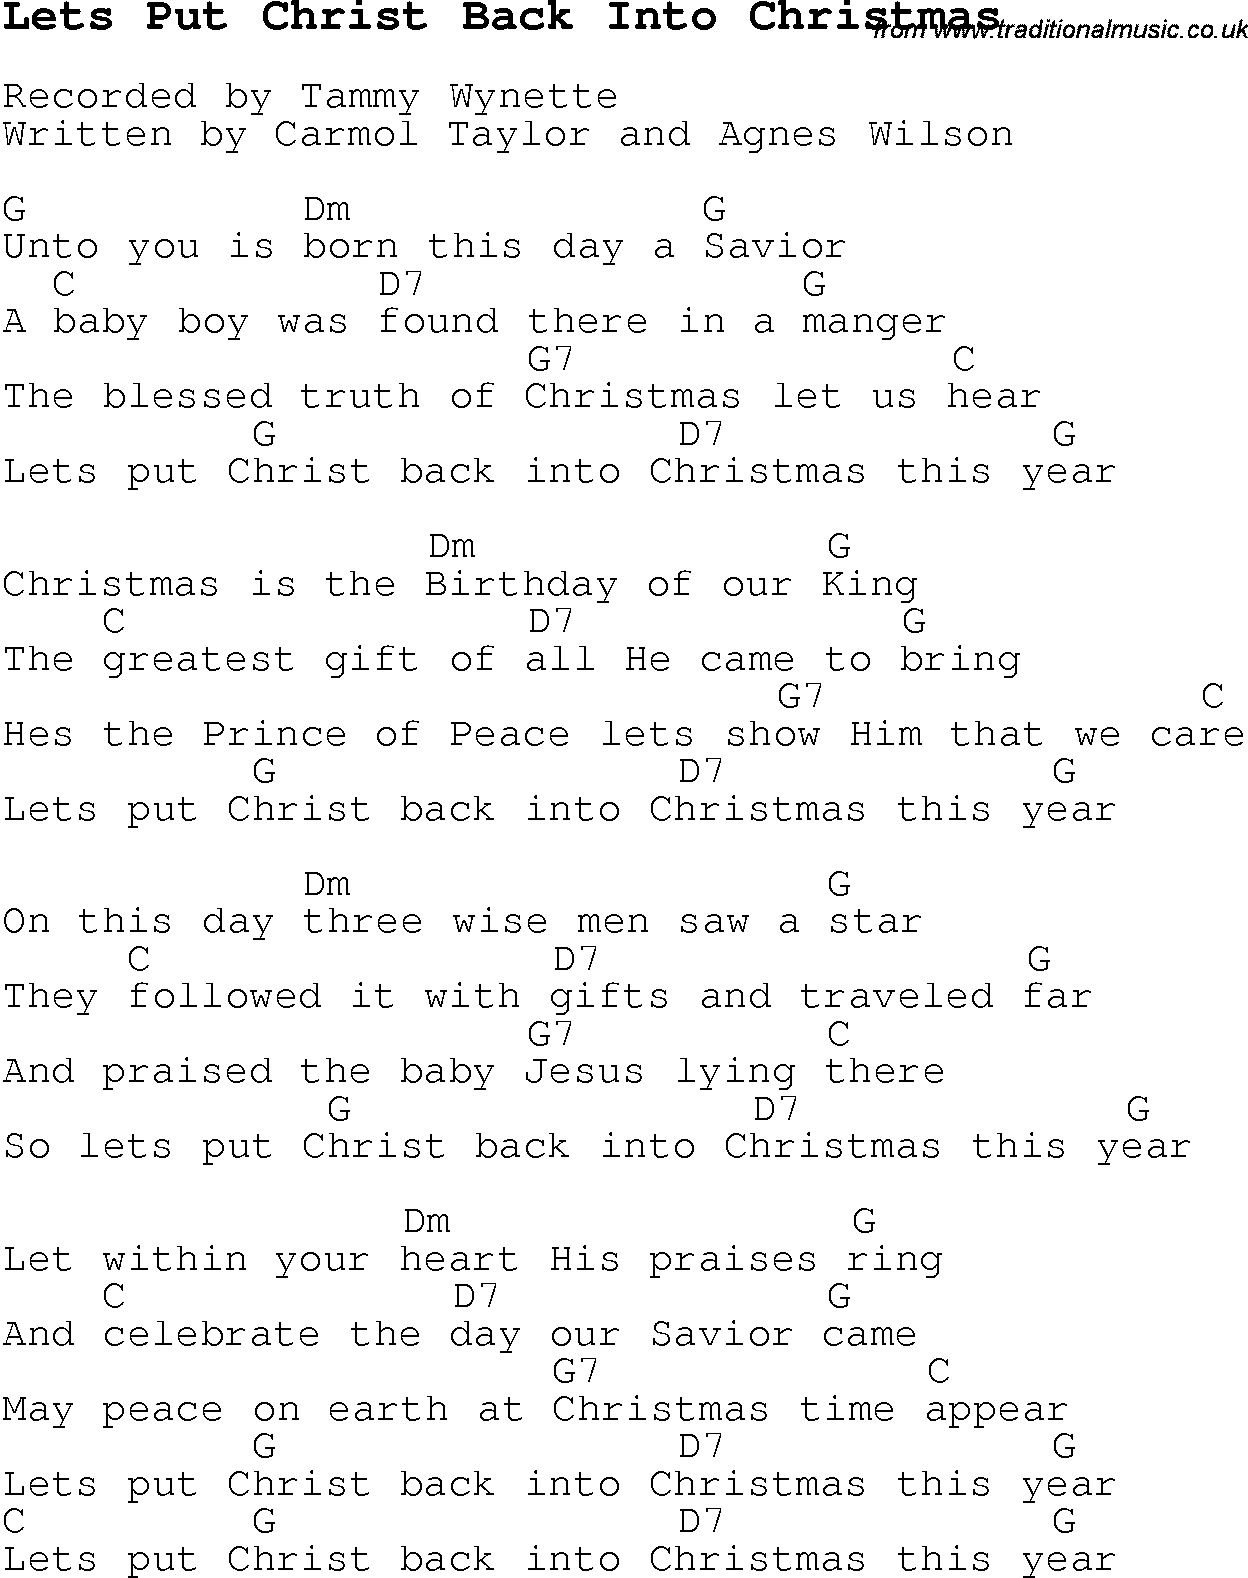 Christmas Carol/Song lyrics with chords for Lets Put Christ Back